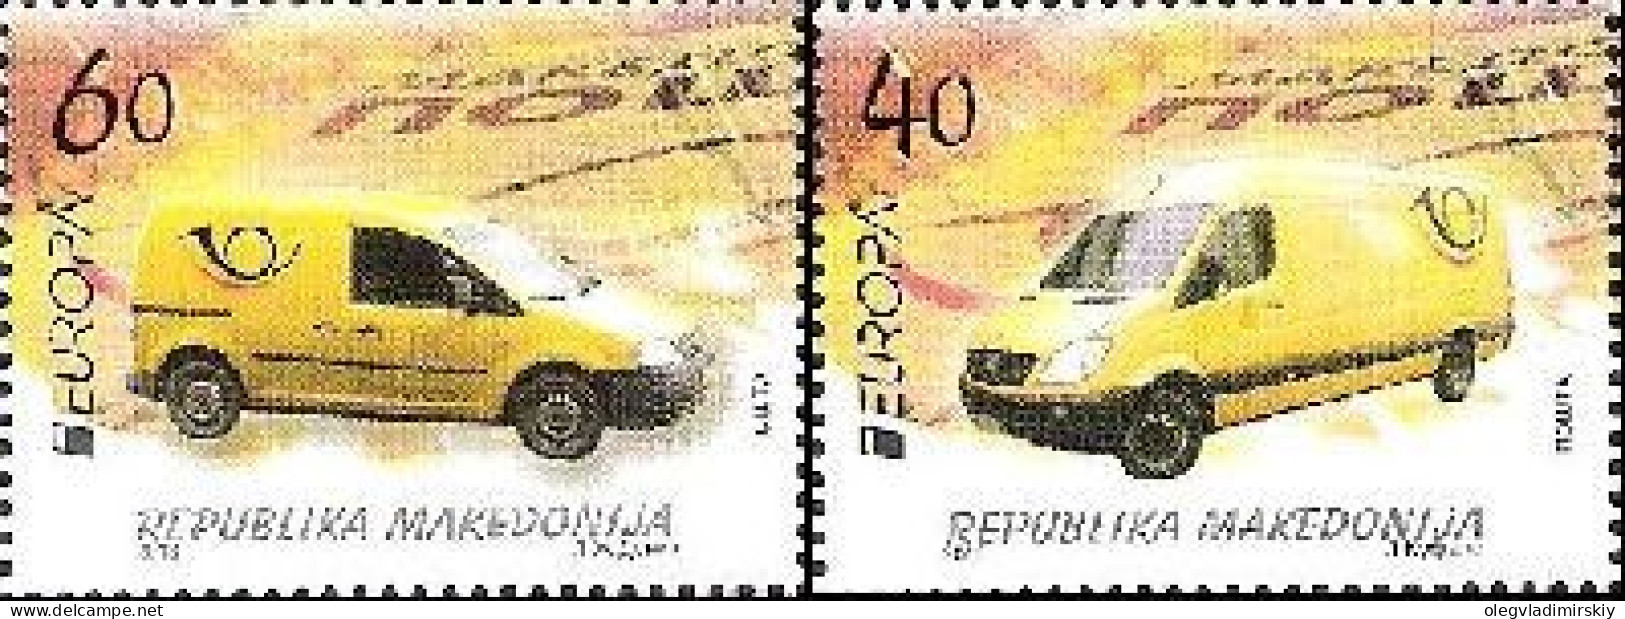 Macedonia 2013 Europa CEPT Postal Transport Cars Minibus Set Of 2 Stamps MNH - 2013